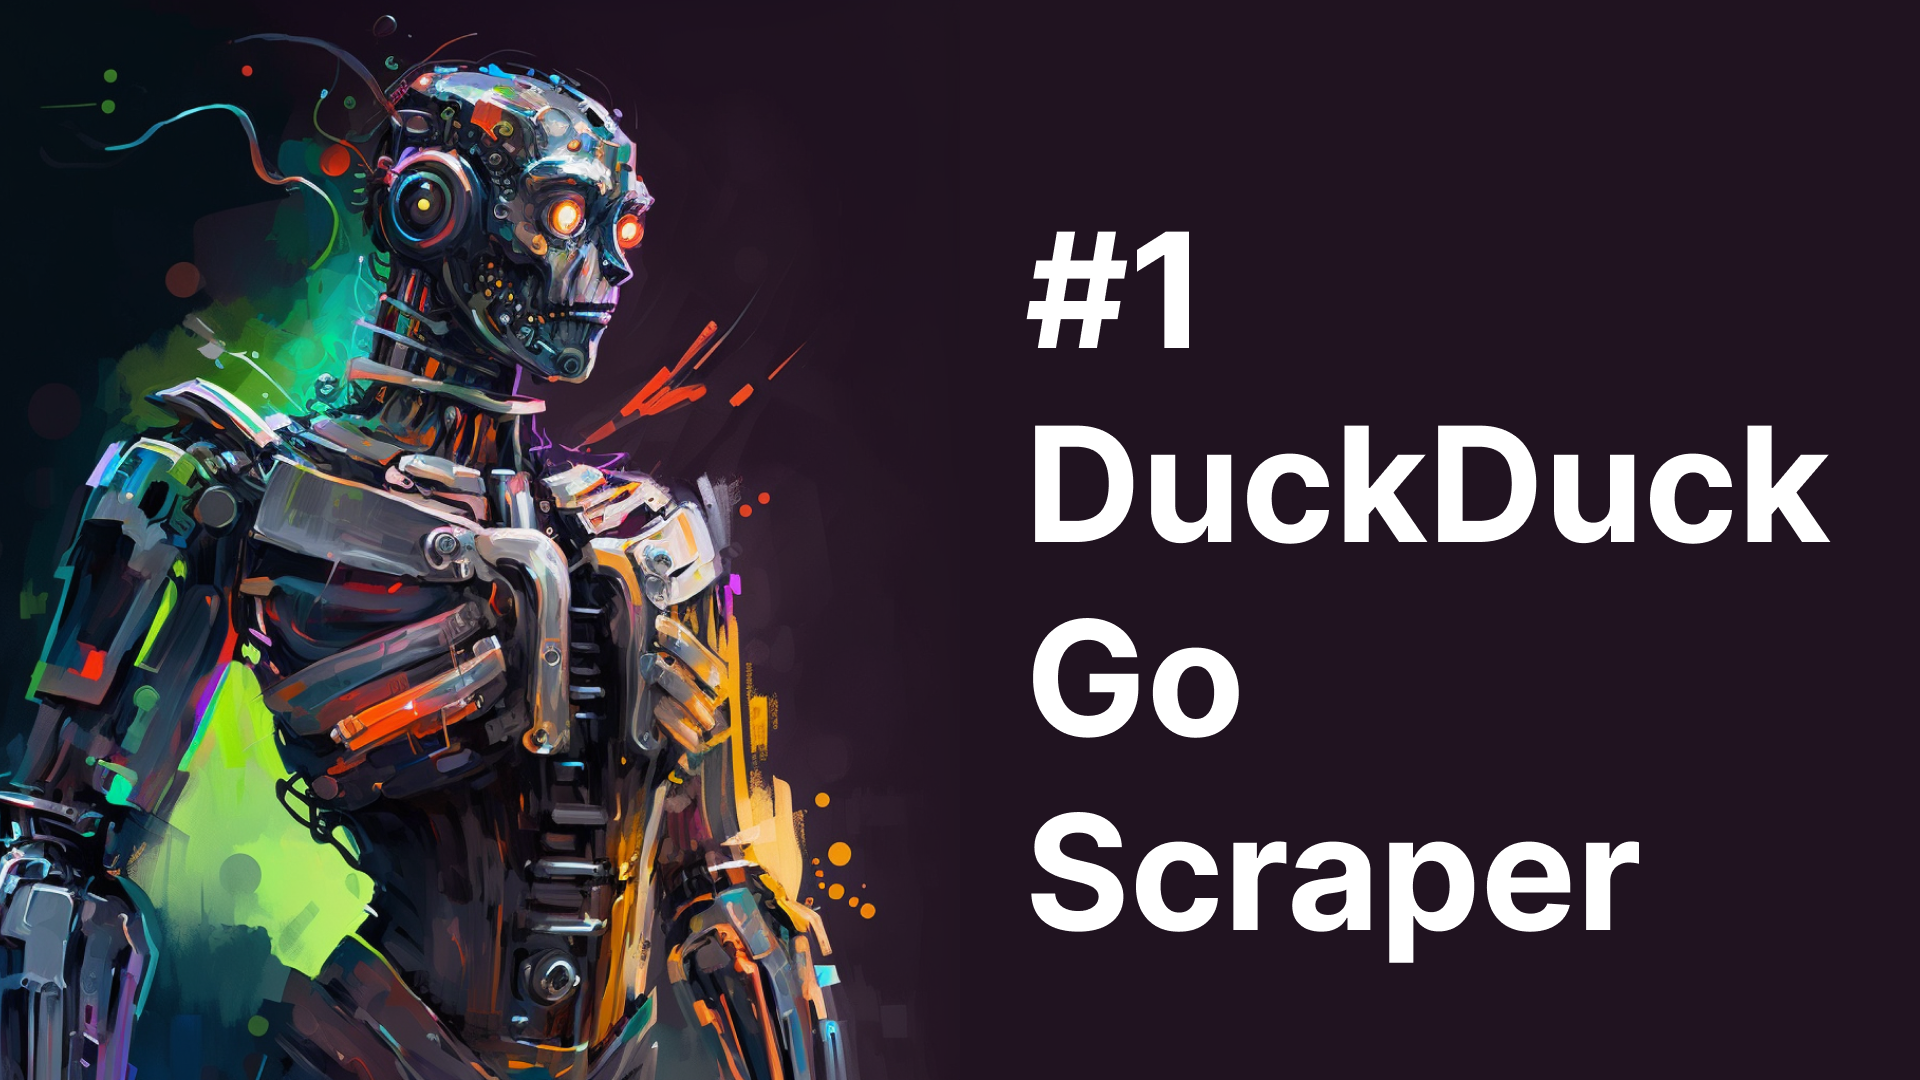 DuckDuckGo Scraper Featured Image